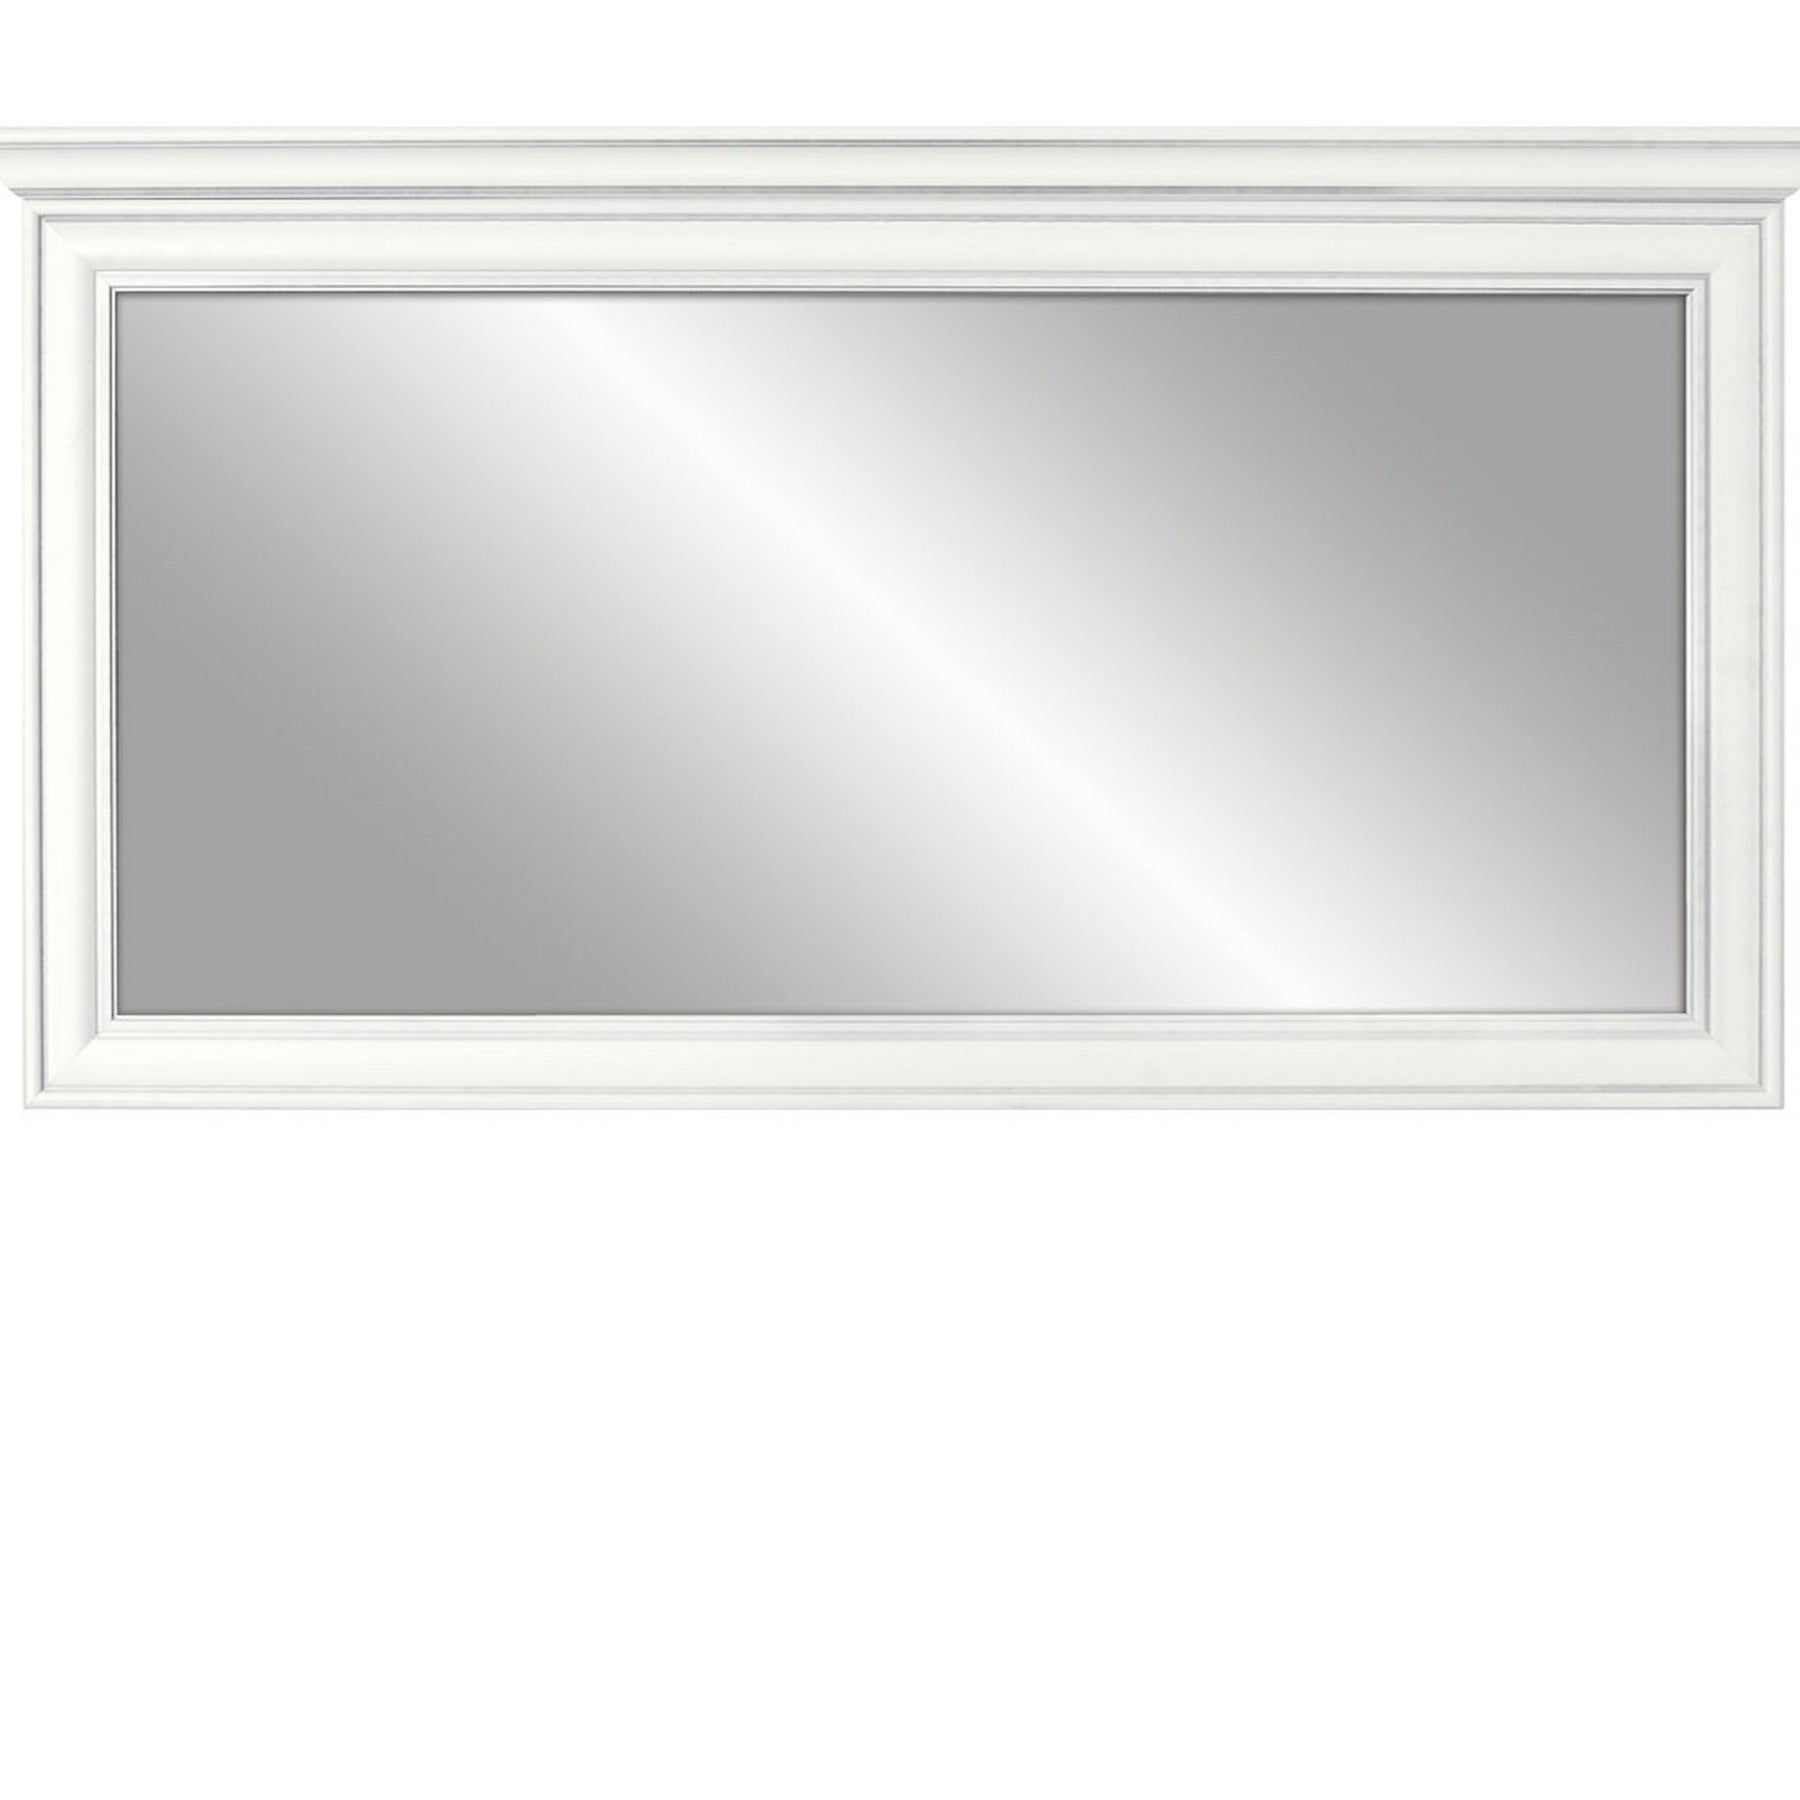 Oglinda decorativa Idento, alba, 155x6.5x71.5 cm